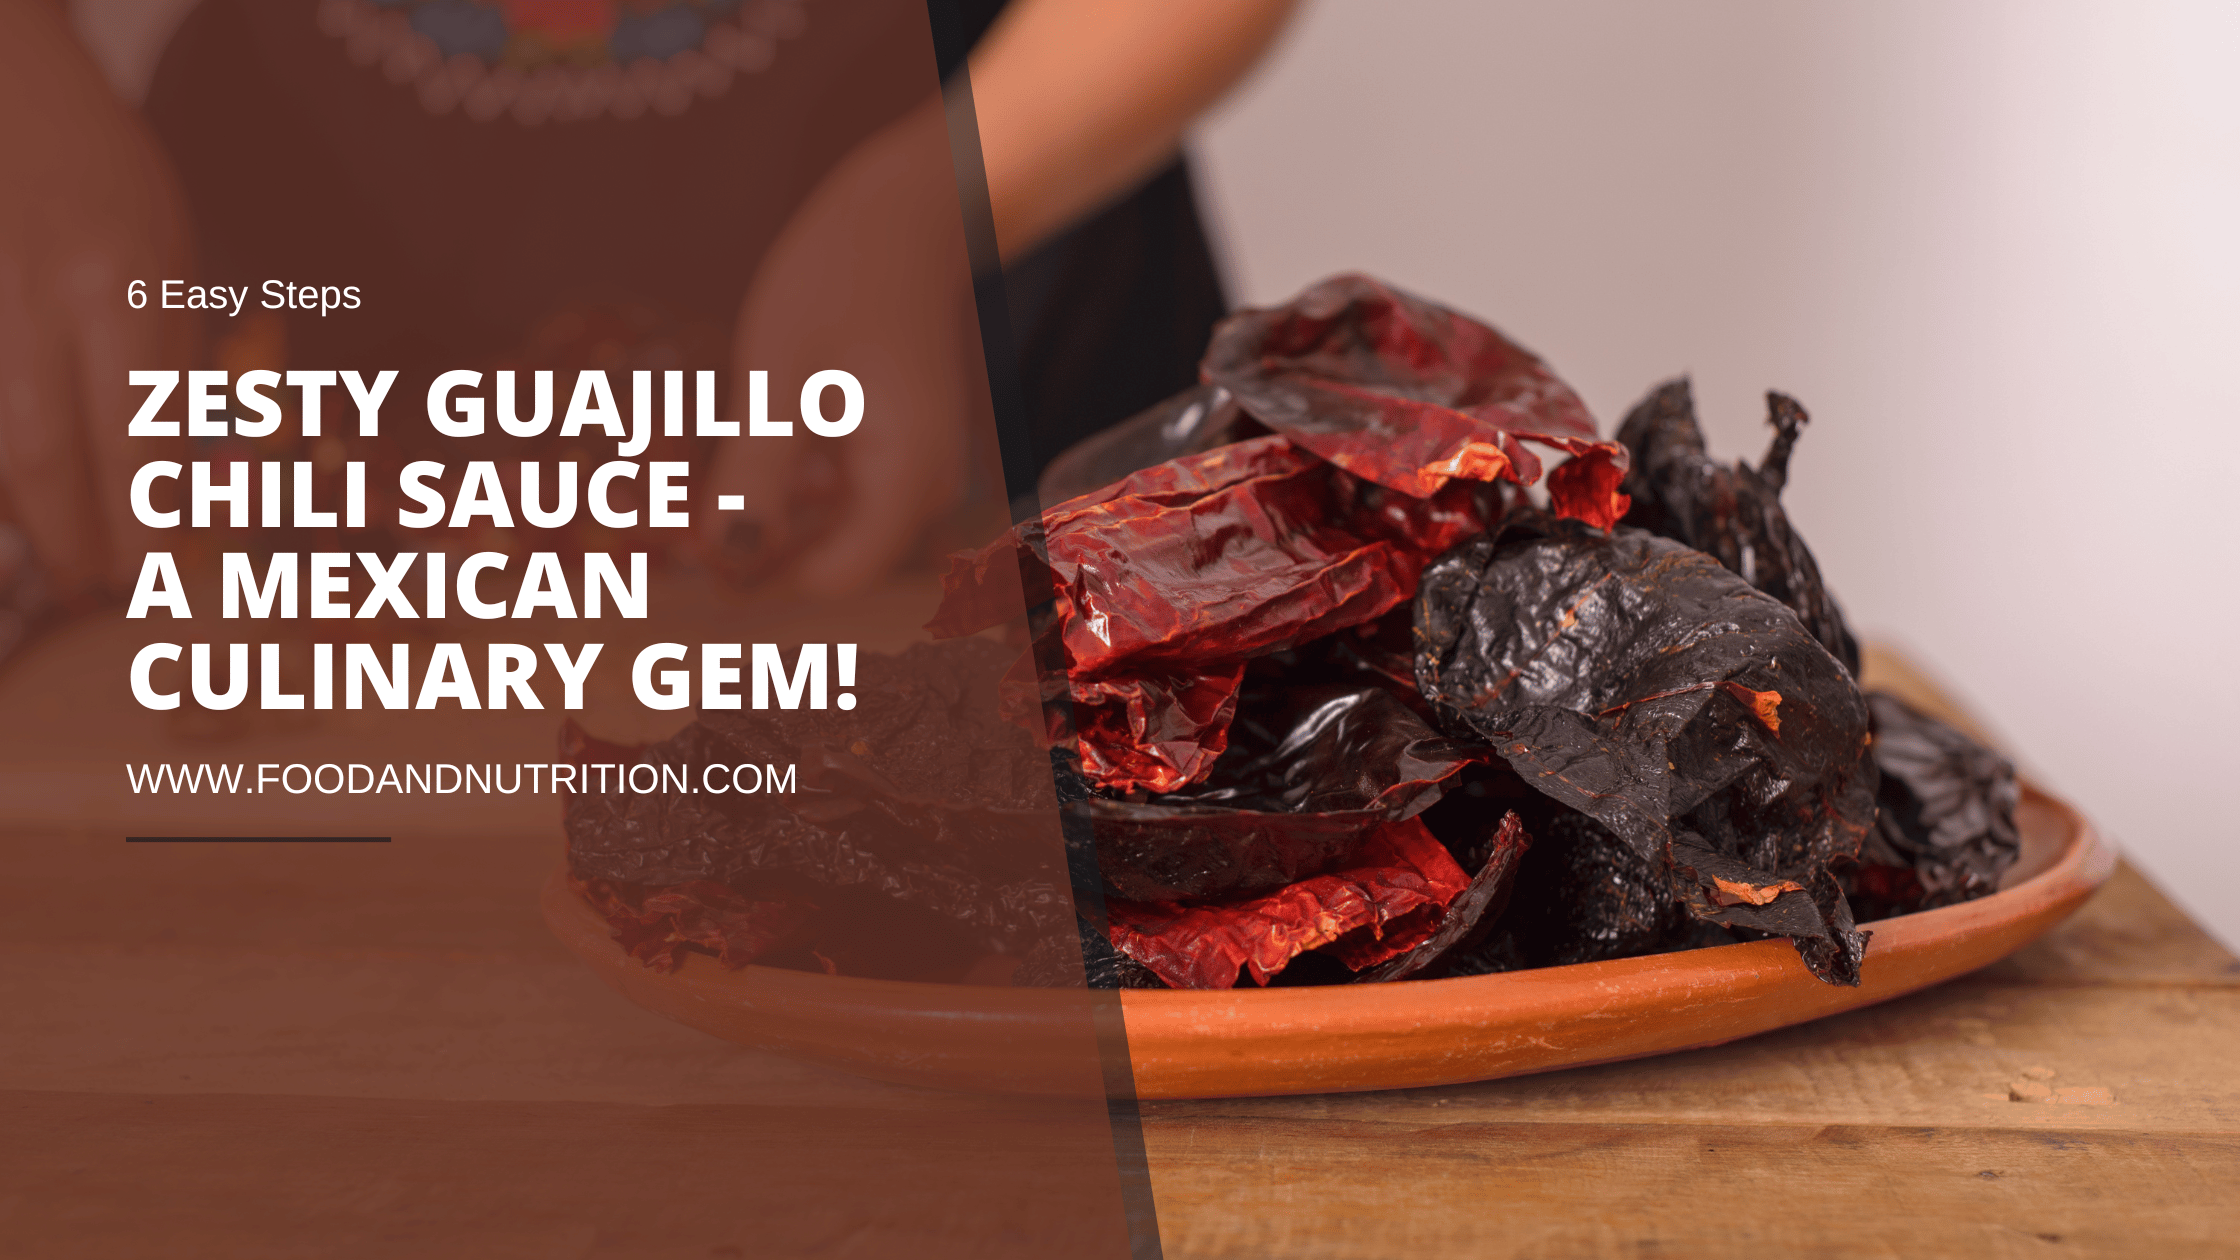 Zesty Guajillo Chili Sauce – A Mexican Culinary Gem!